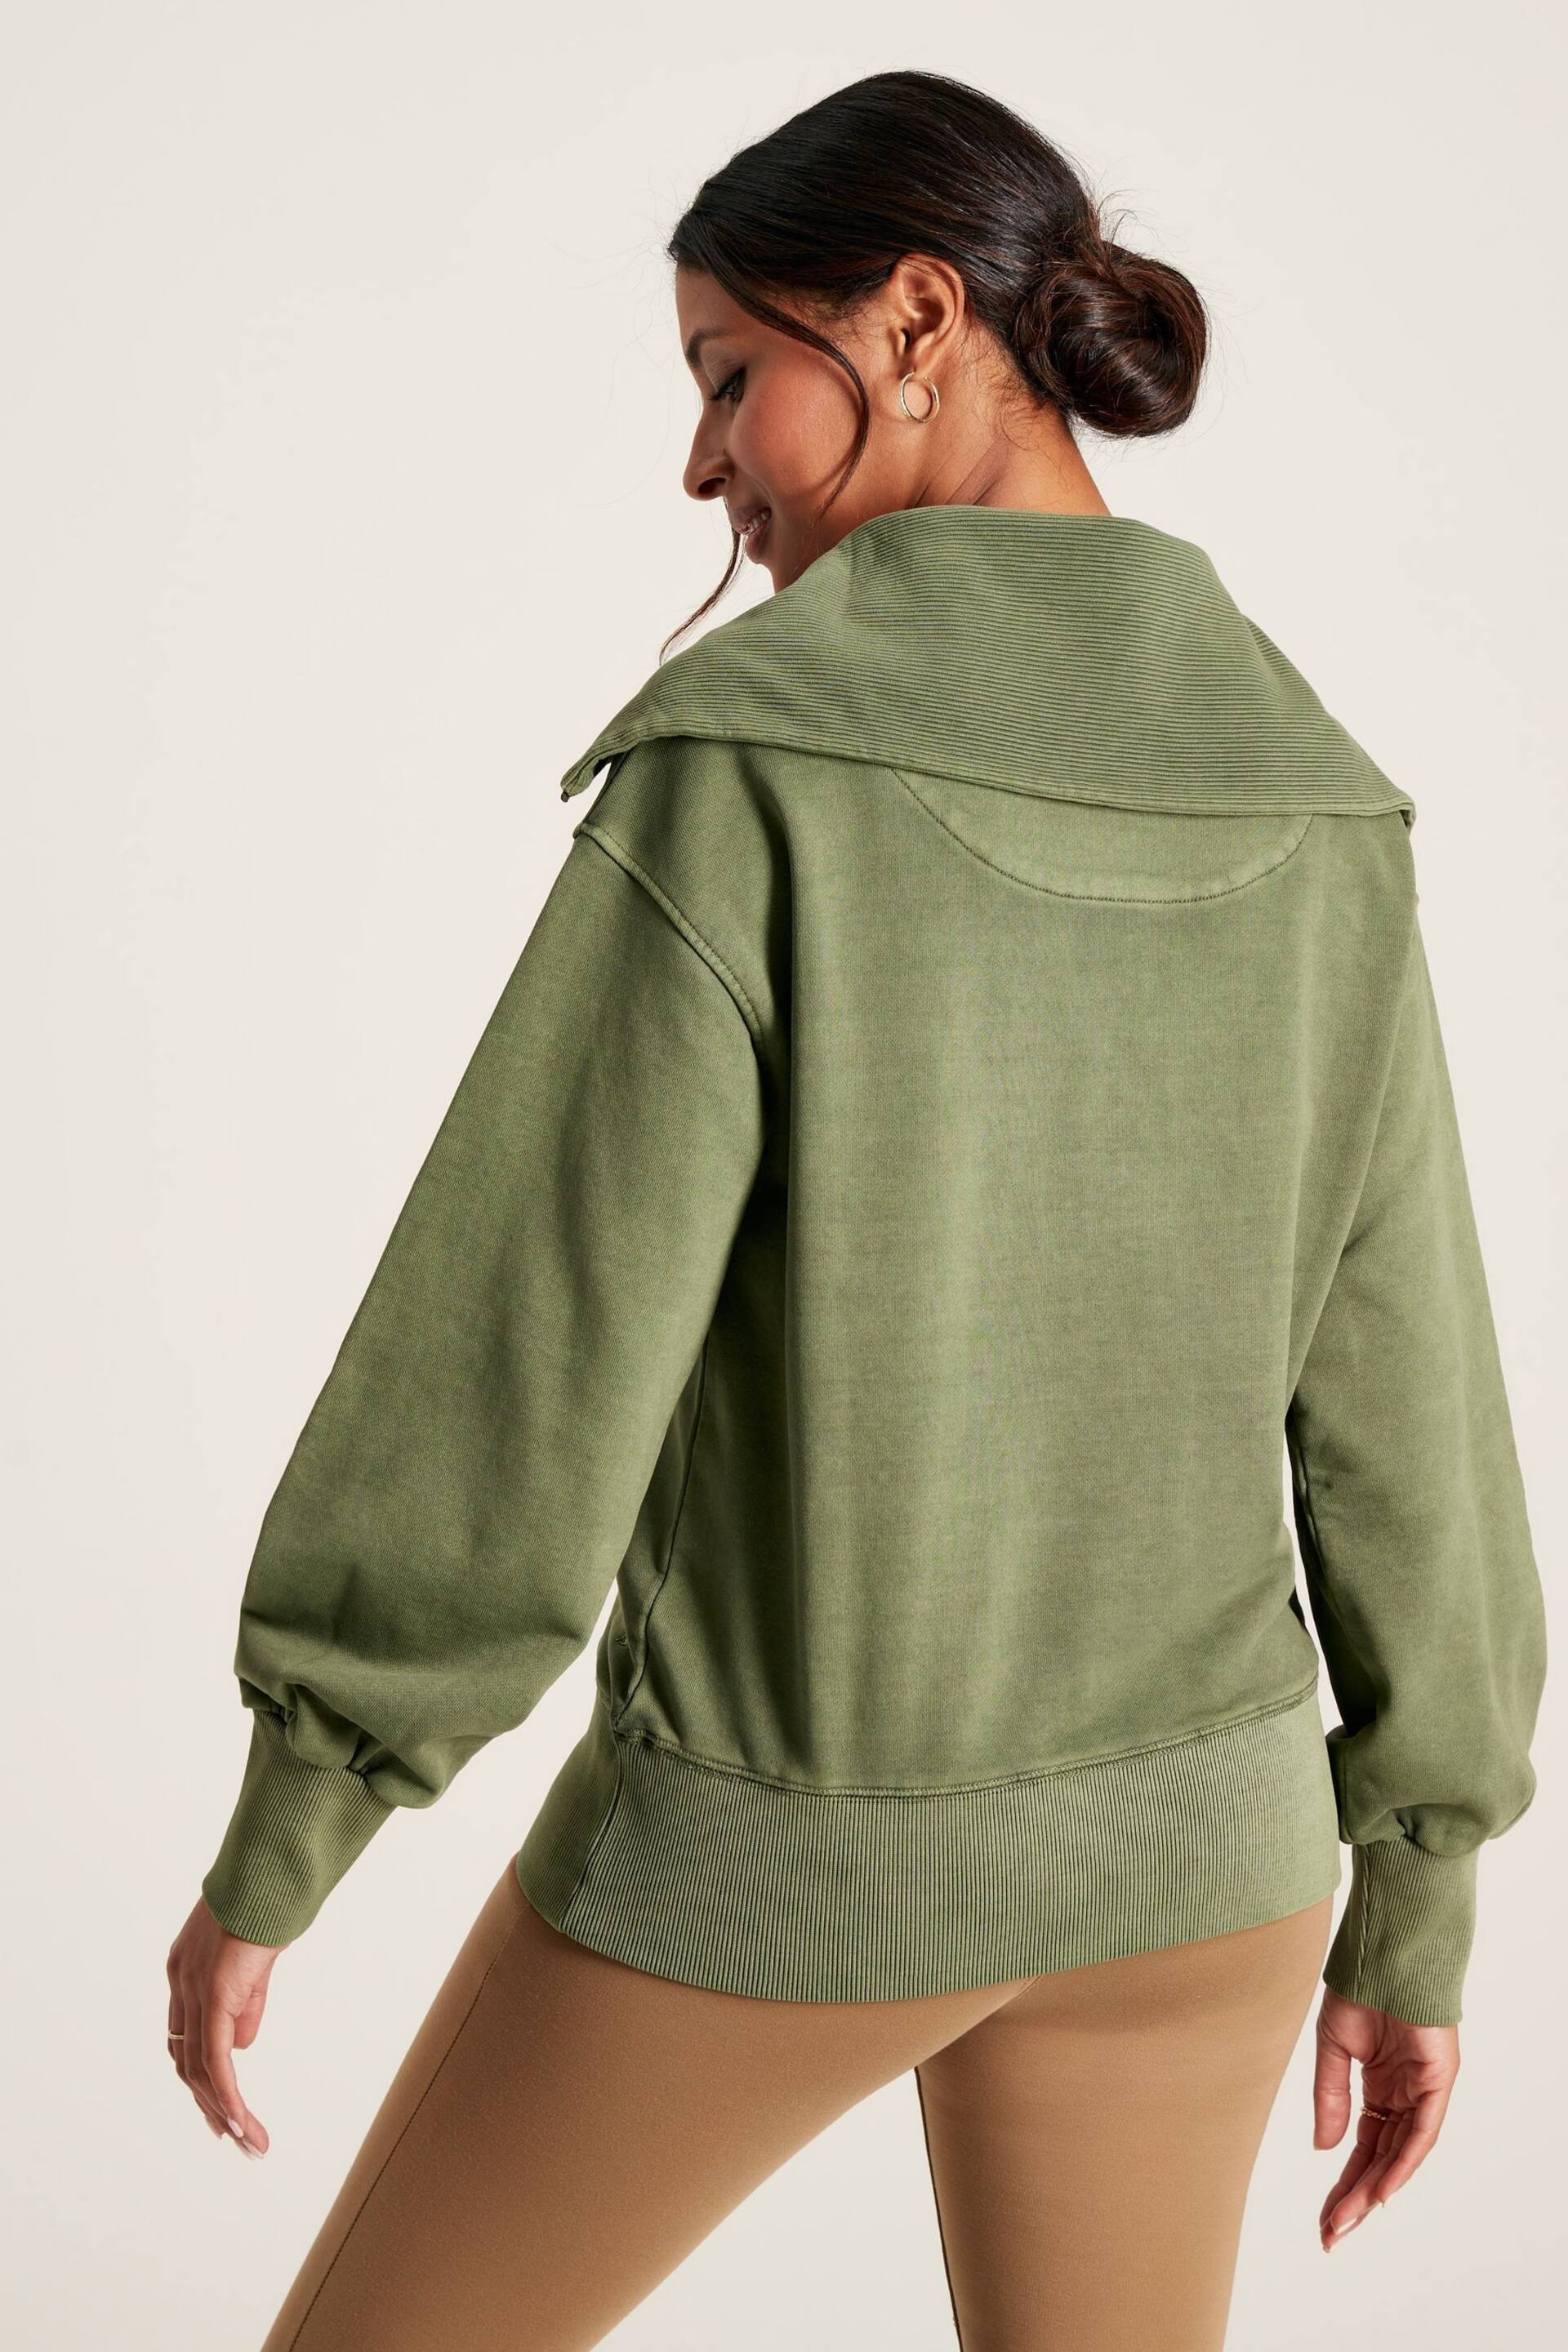 Joules Tia Green Pullover Sweatshirt - Image 2 of 6